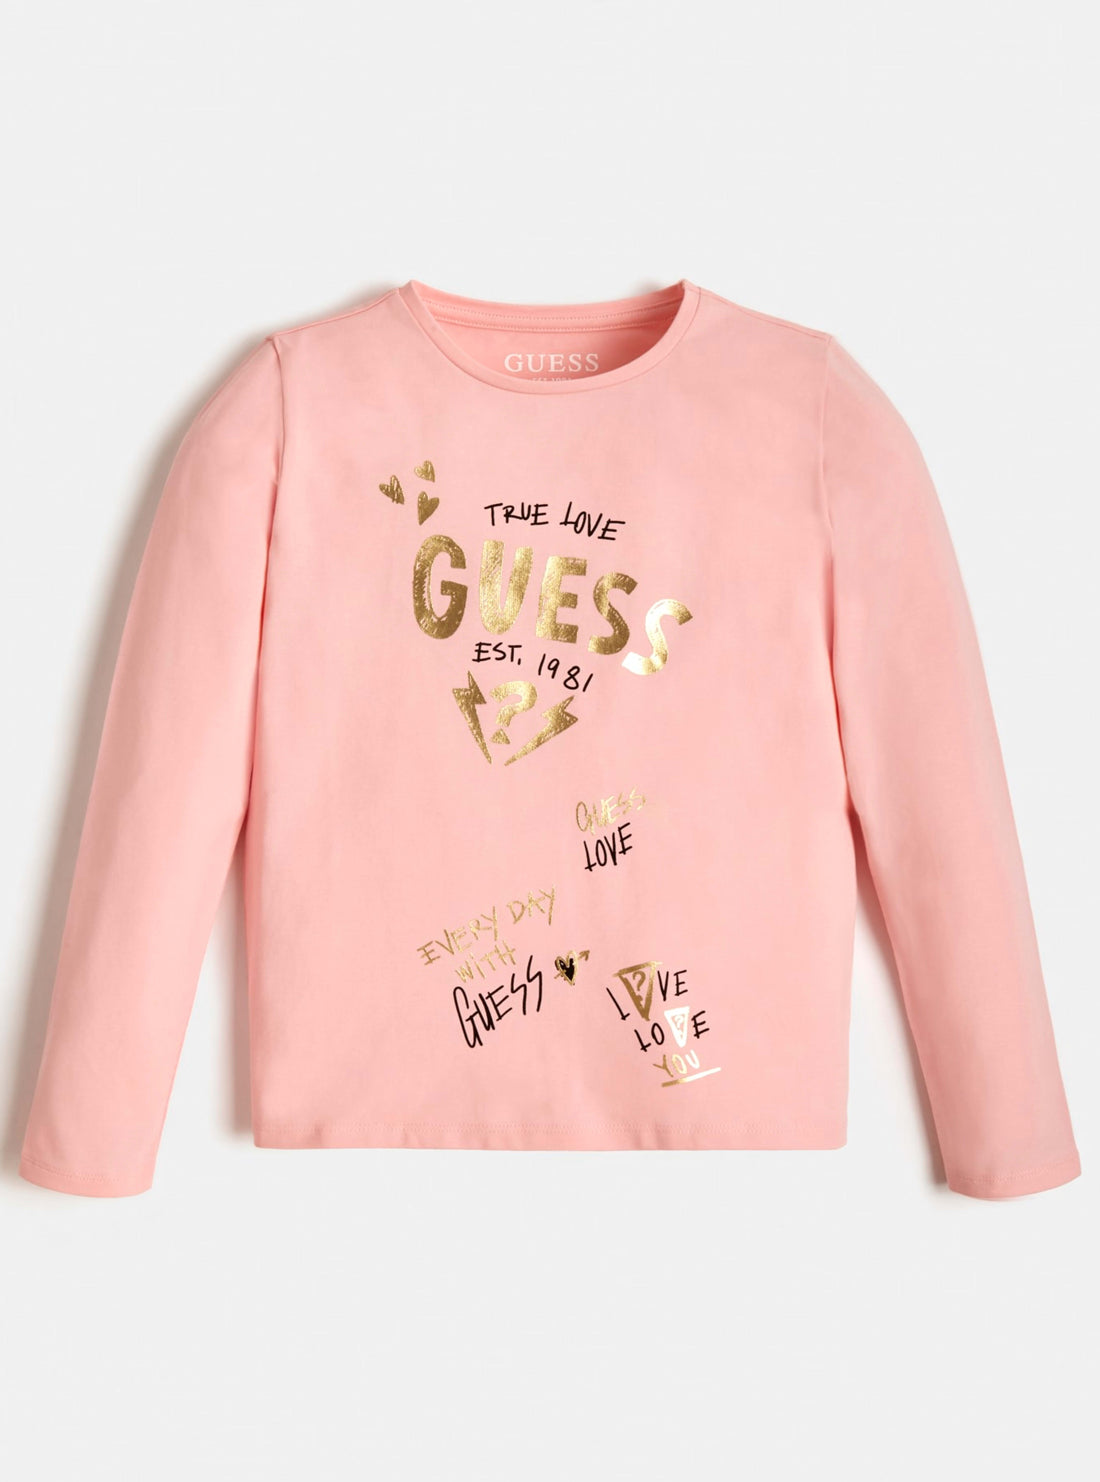 GUESS Kids Girls Pink True Love T-Shirt (7-16) J1BI02J1311 Front View